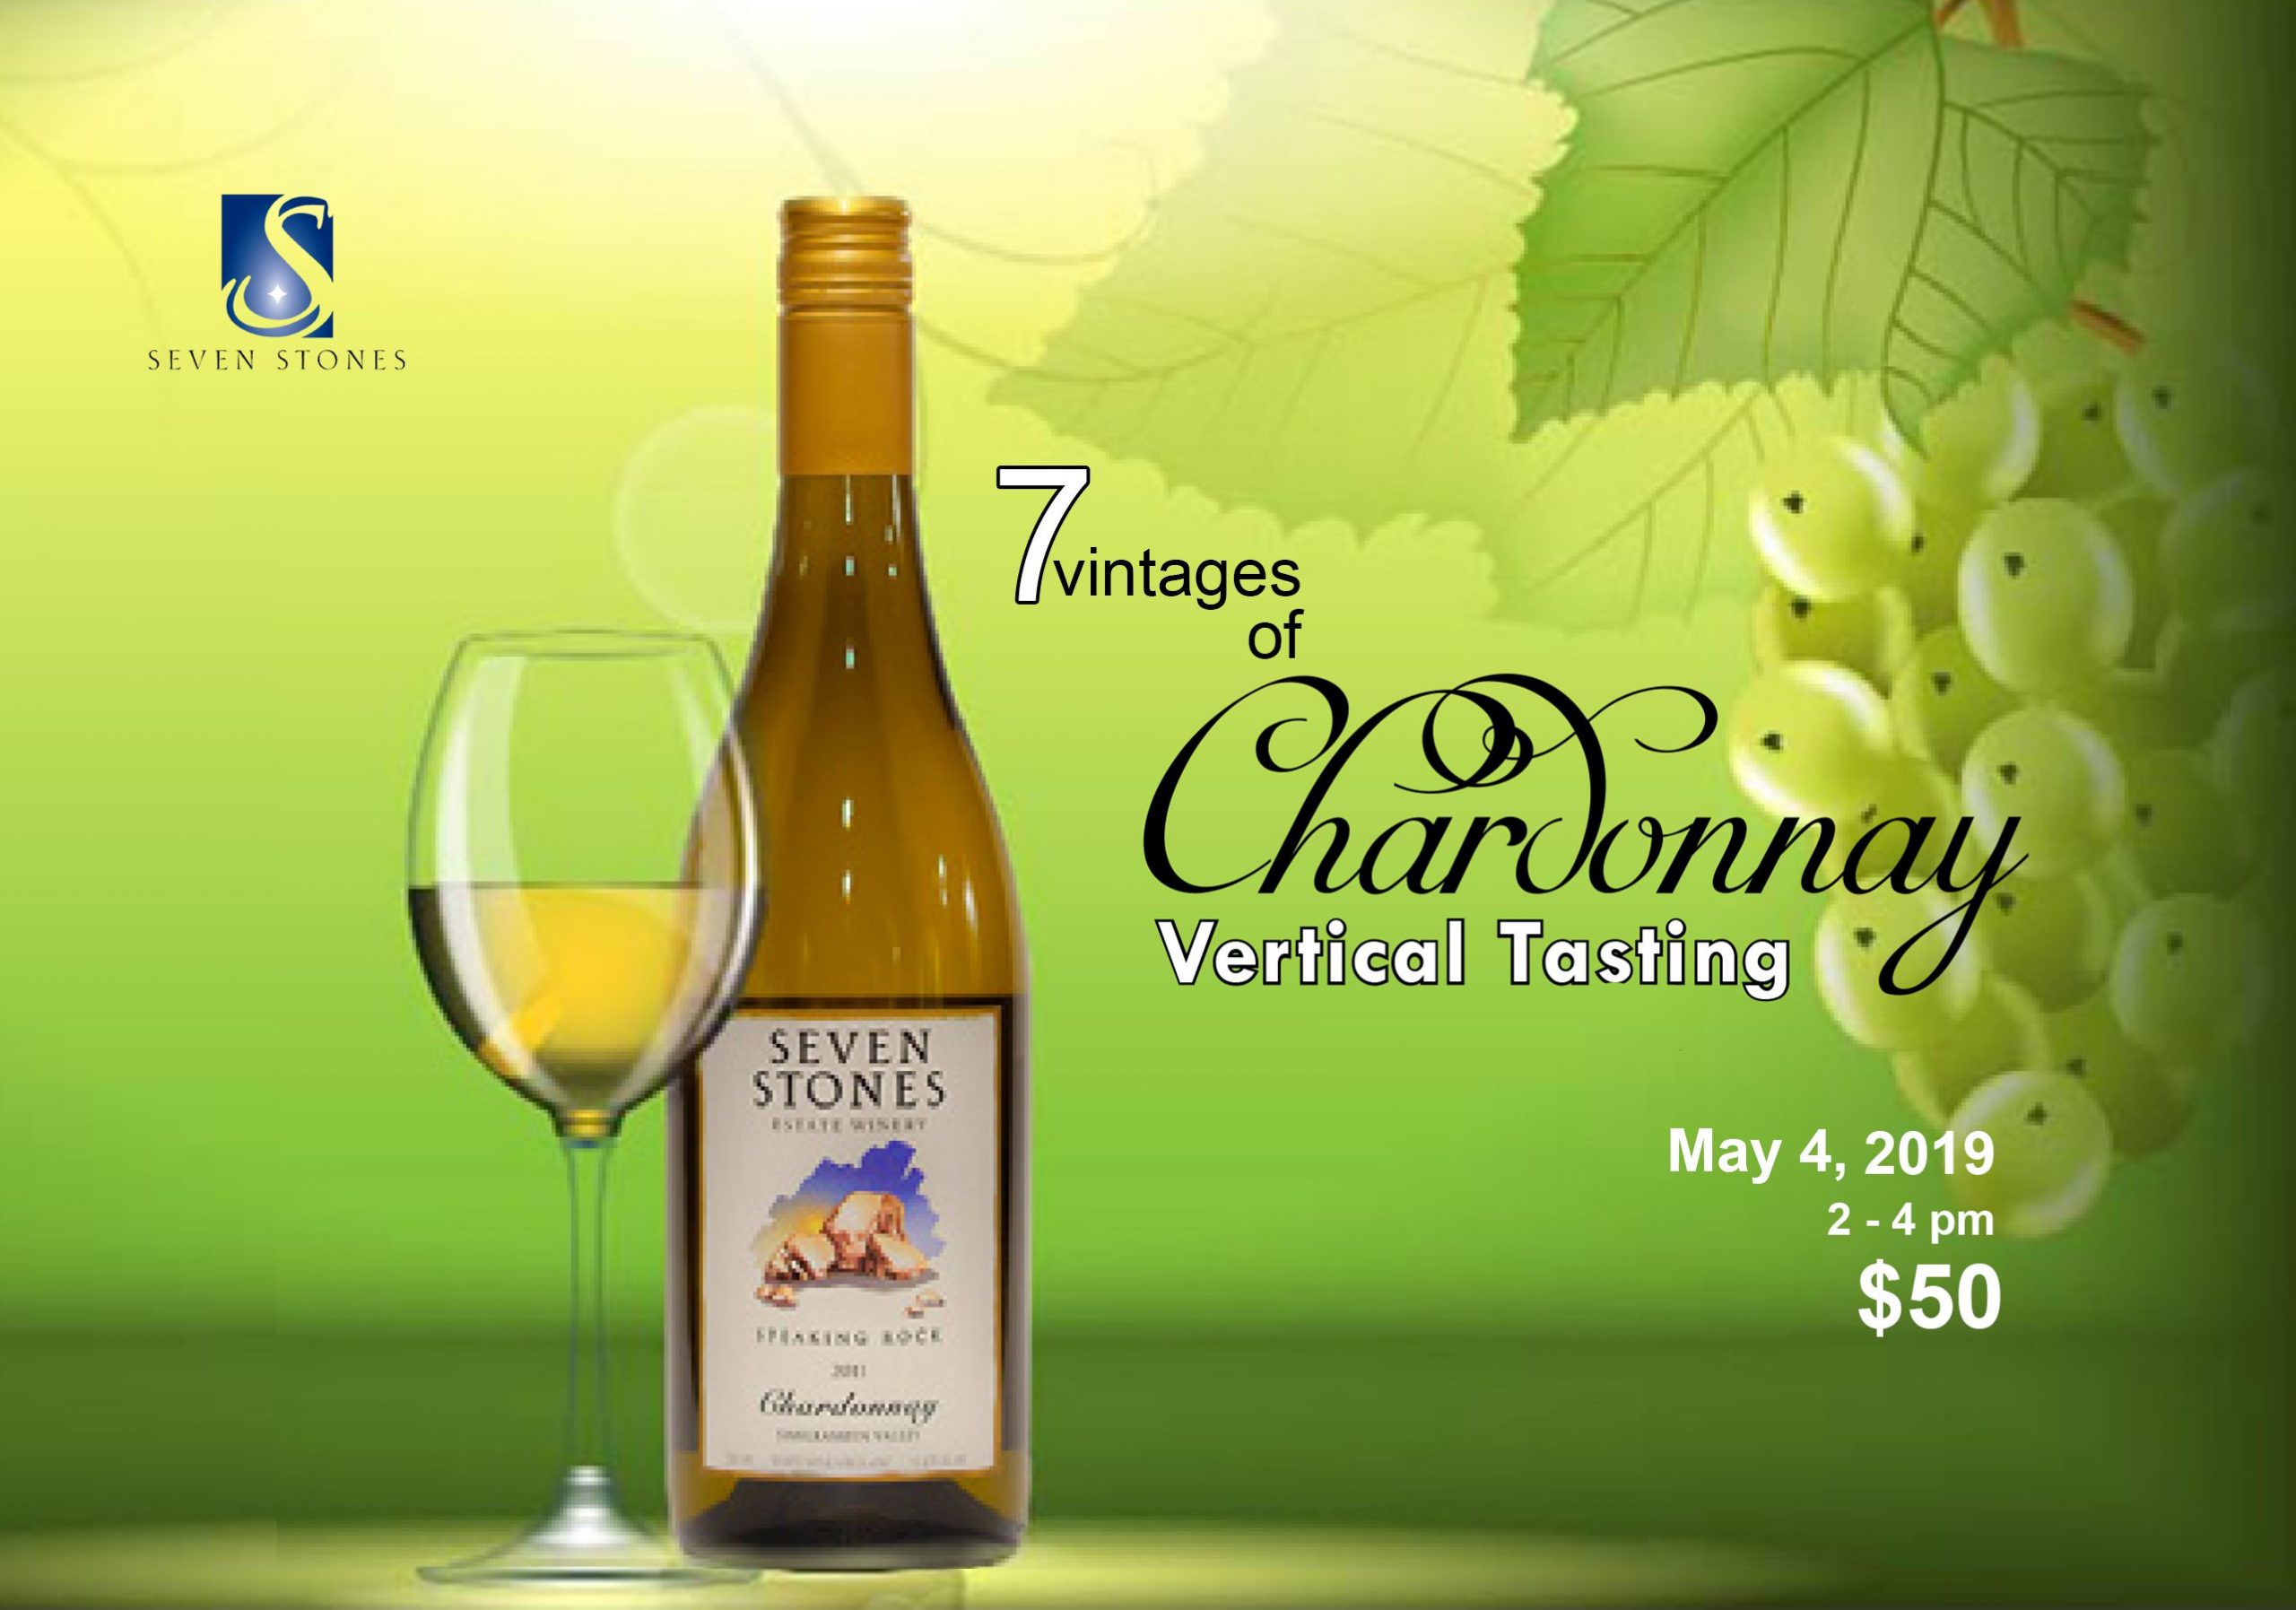 Seven Stones Chardonnay tasting event poster